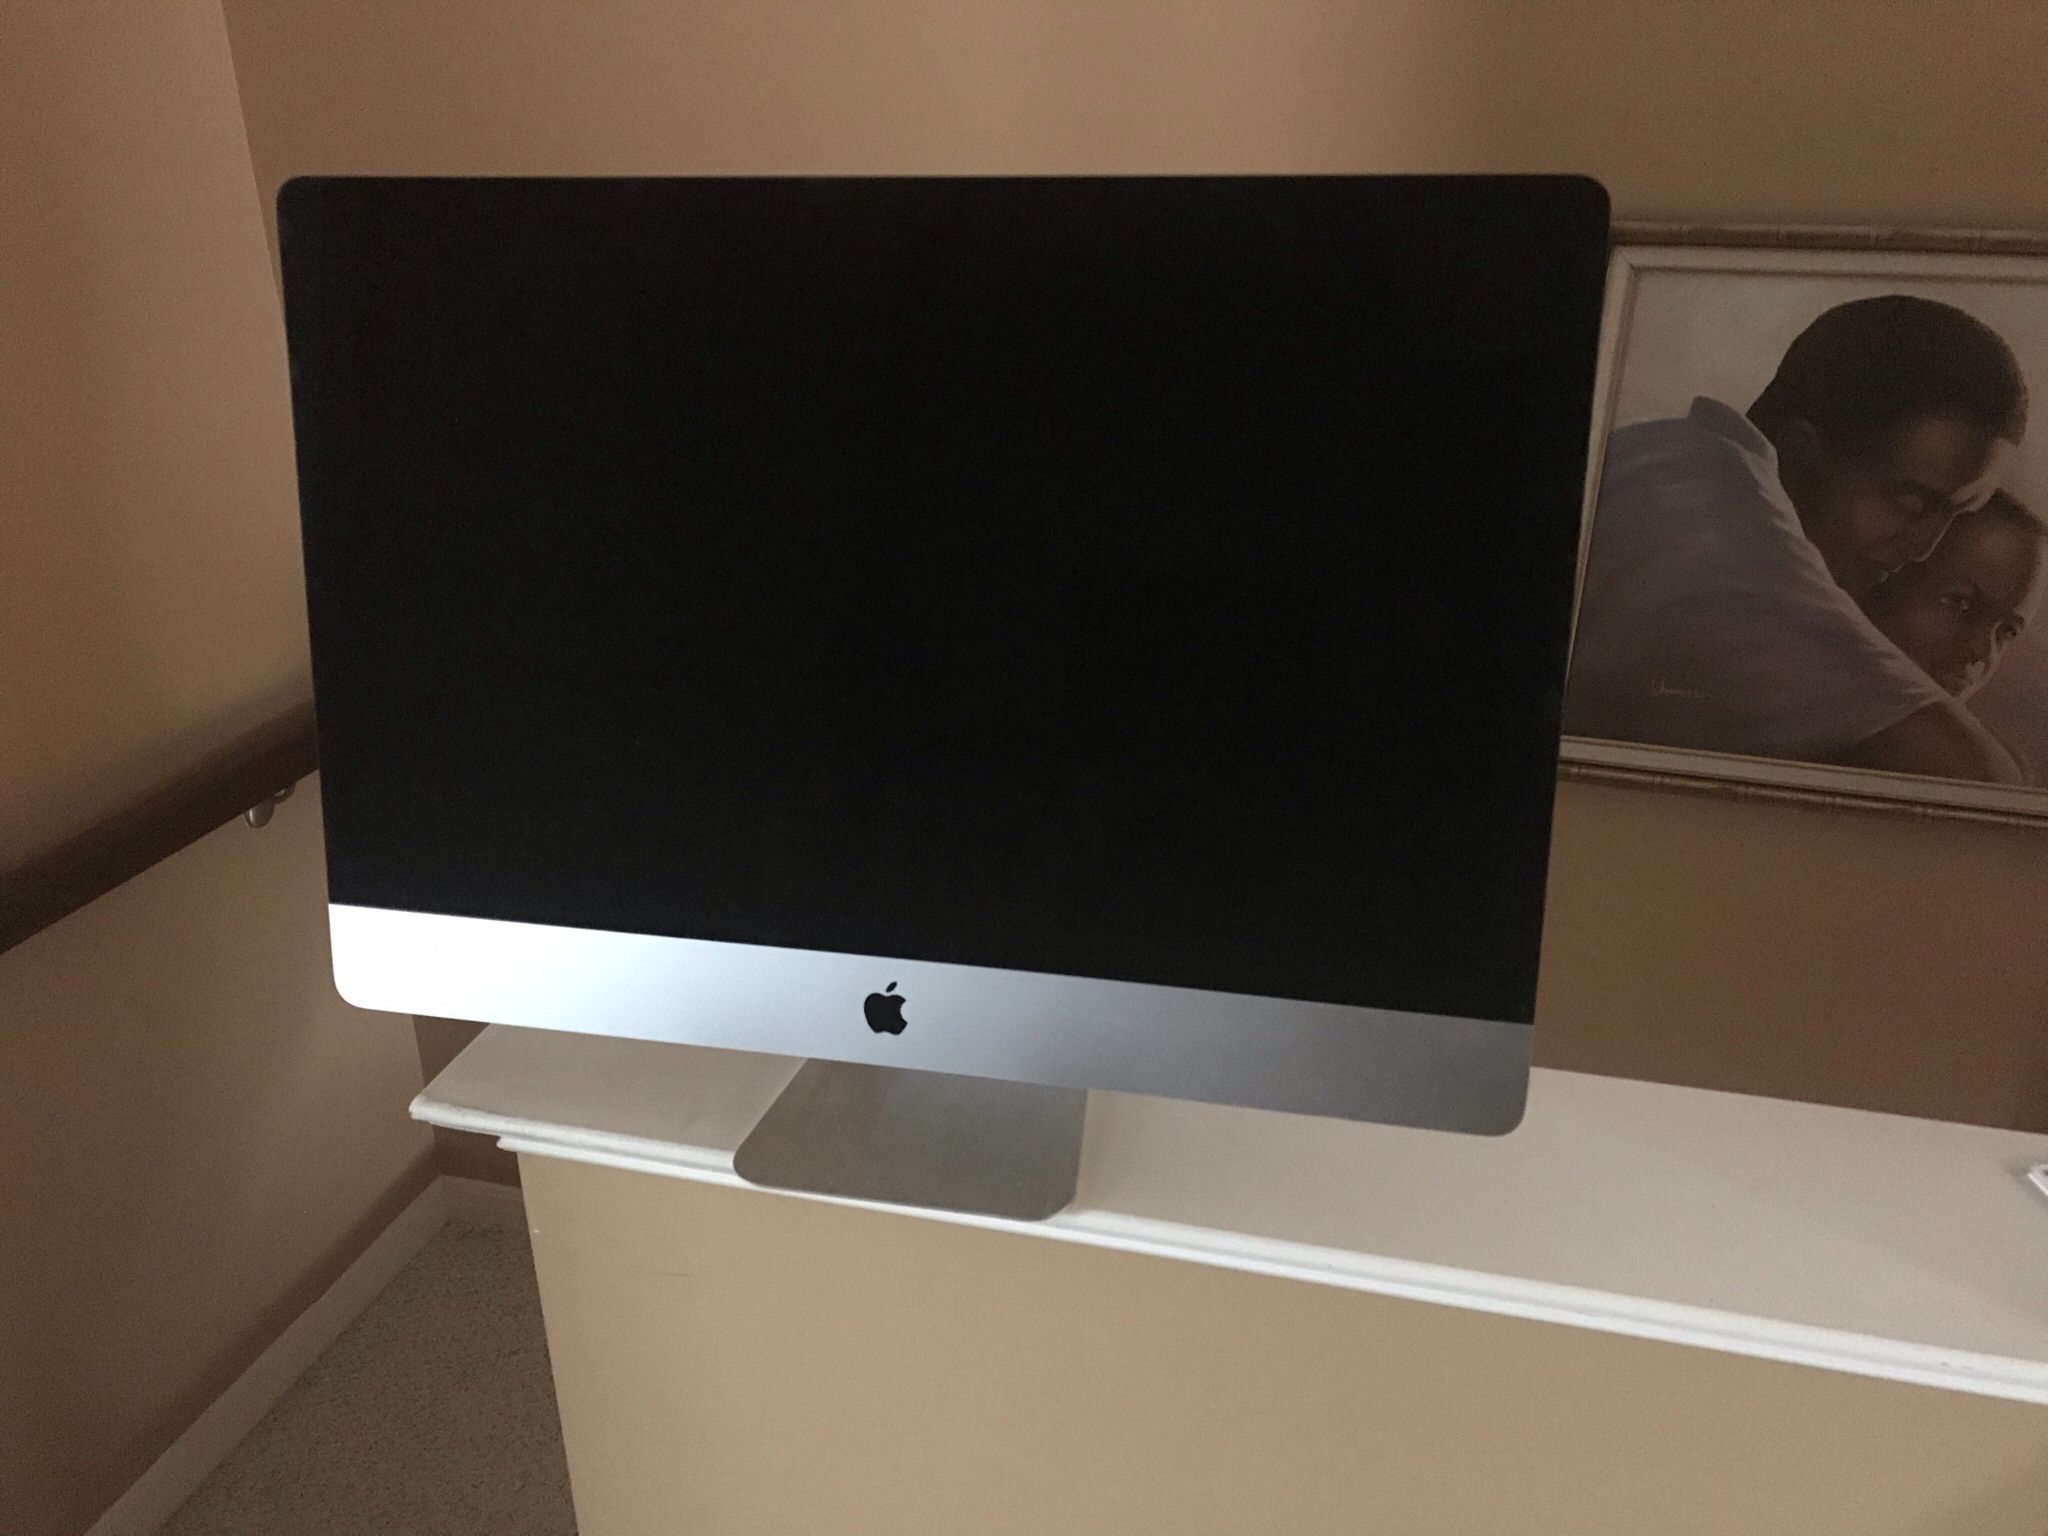 Apple 27” iMac with Retina 5k Display. New never used.